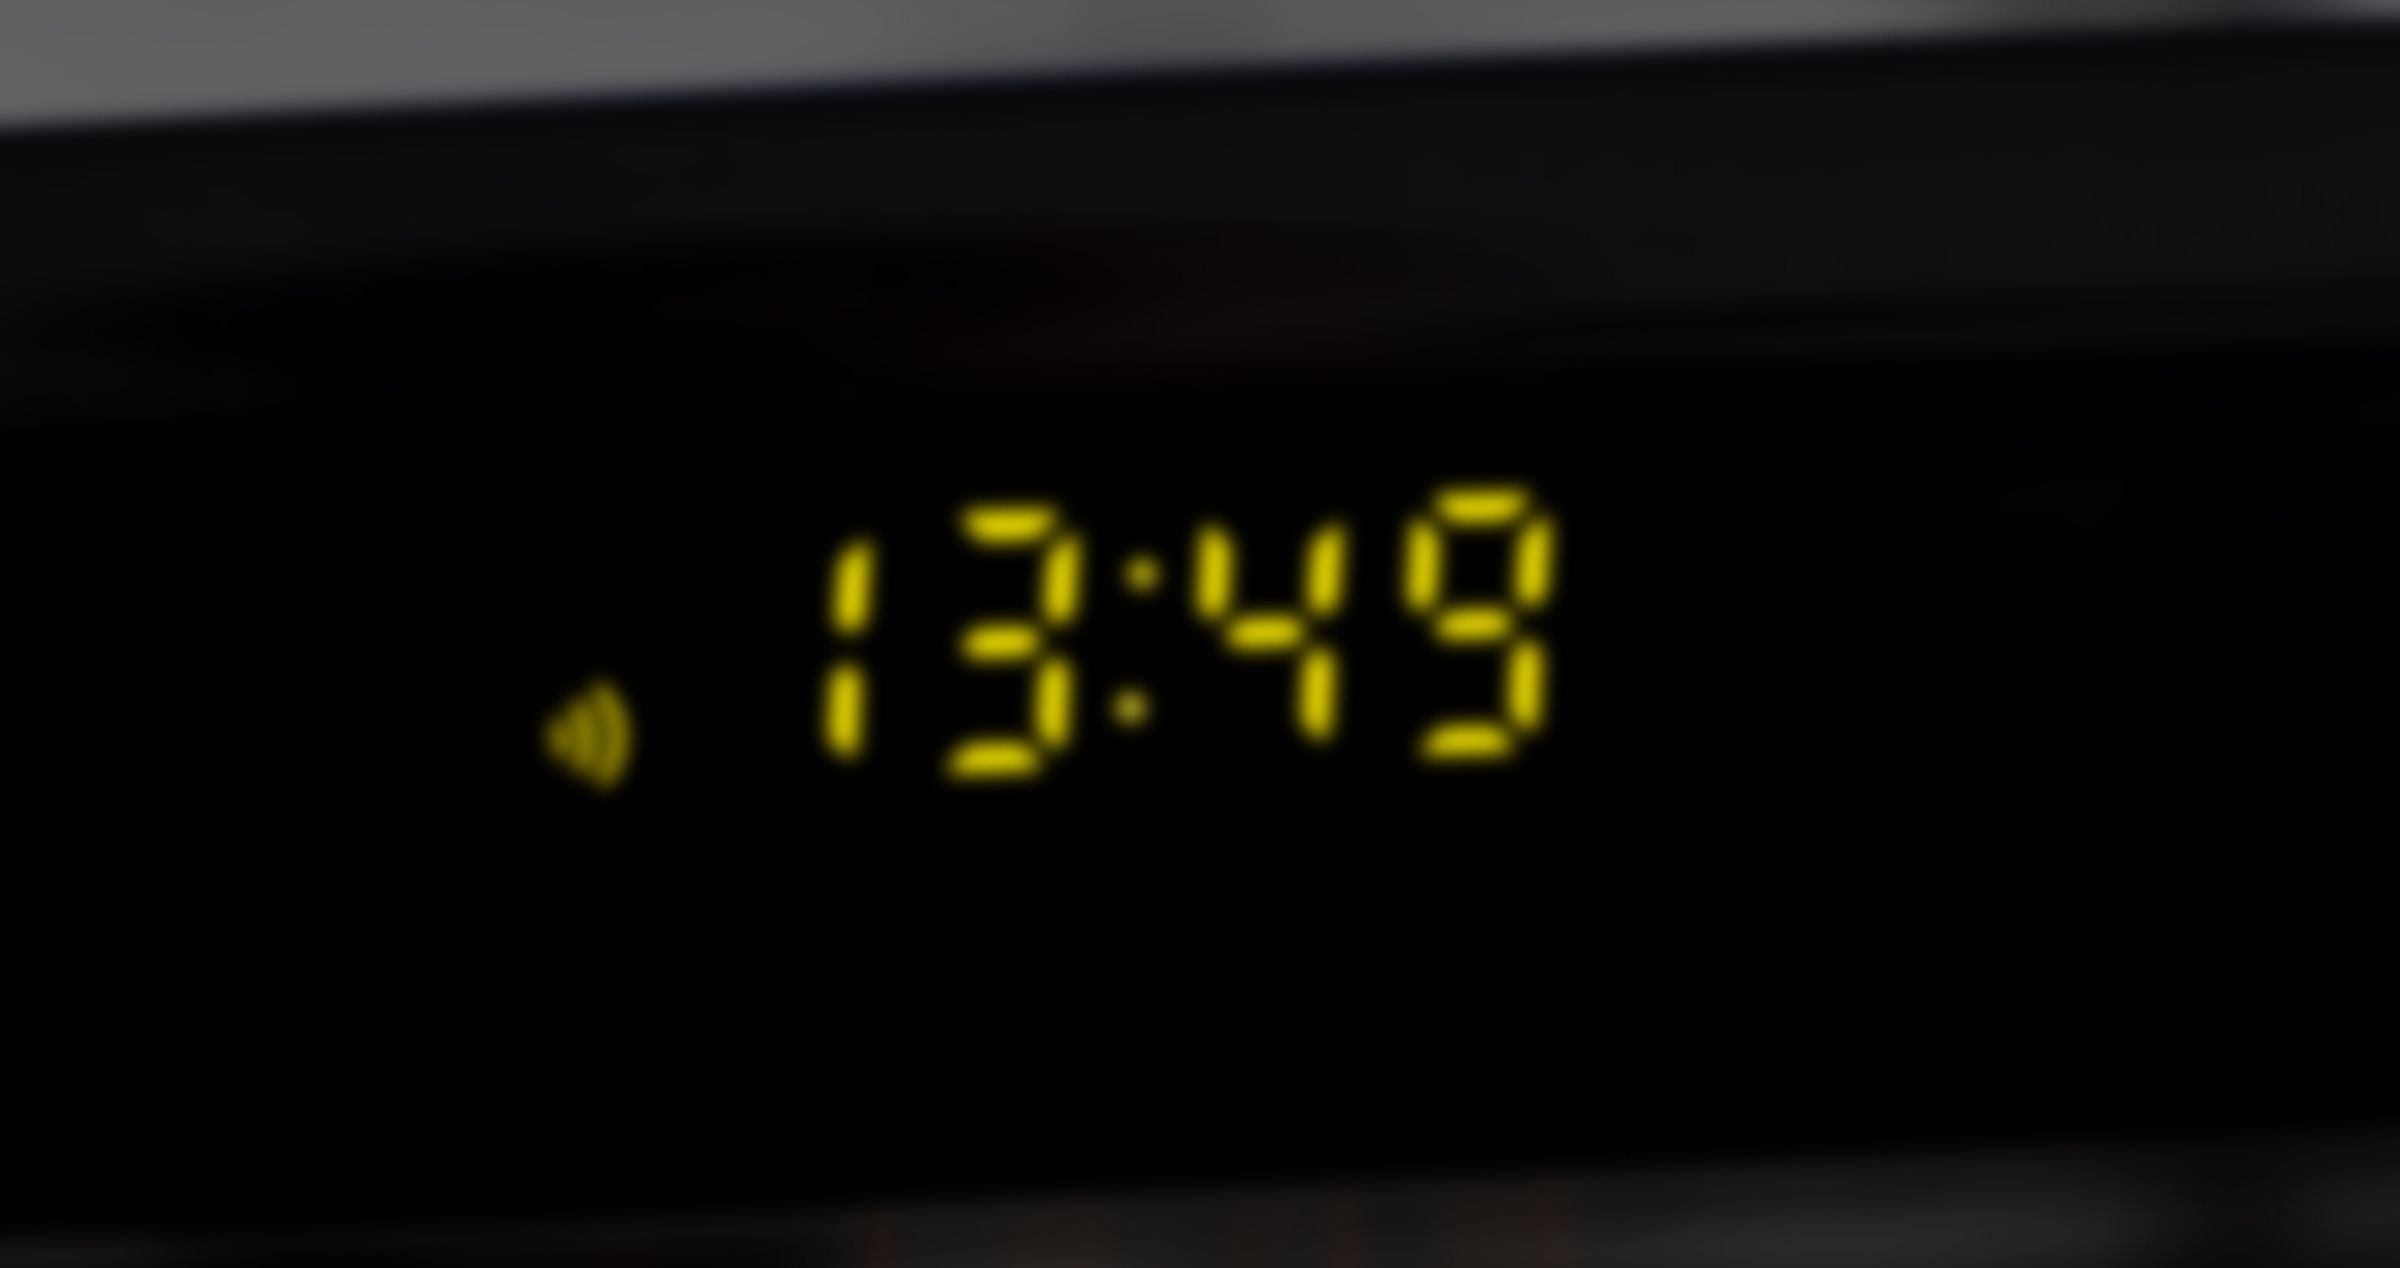 Image of slightly blurry digital clock